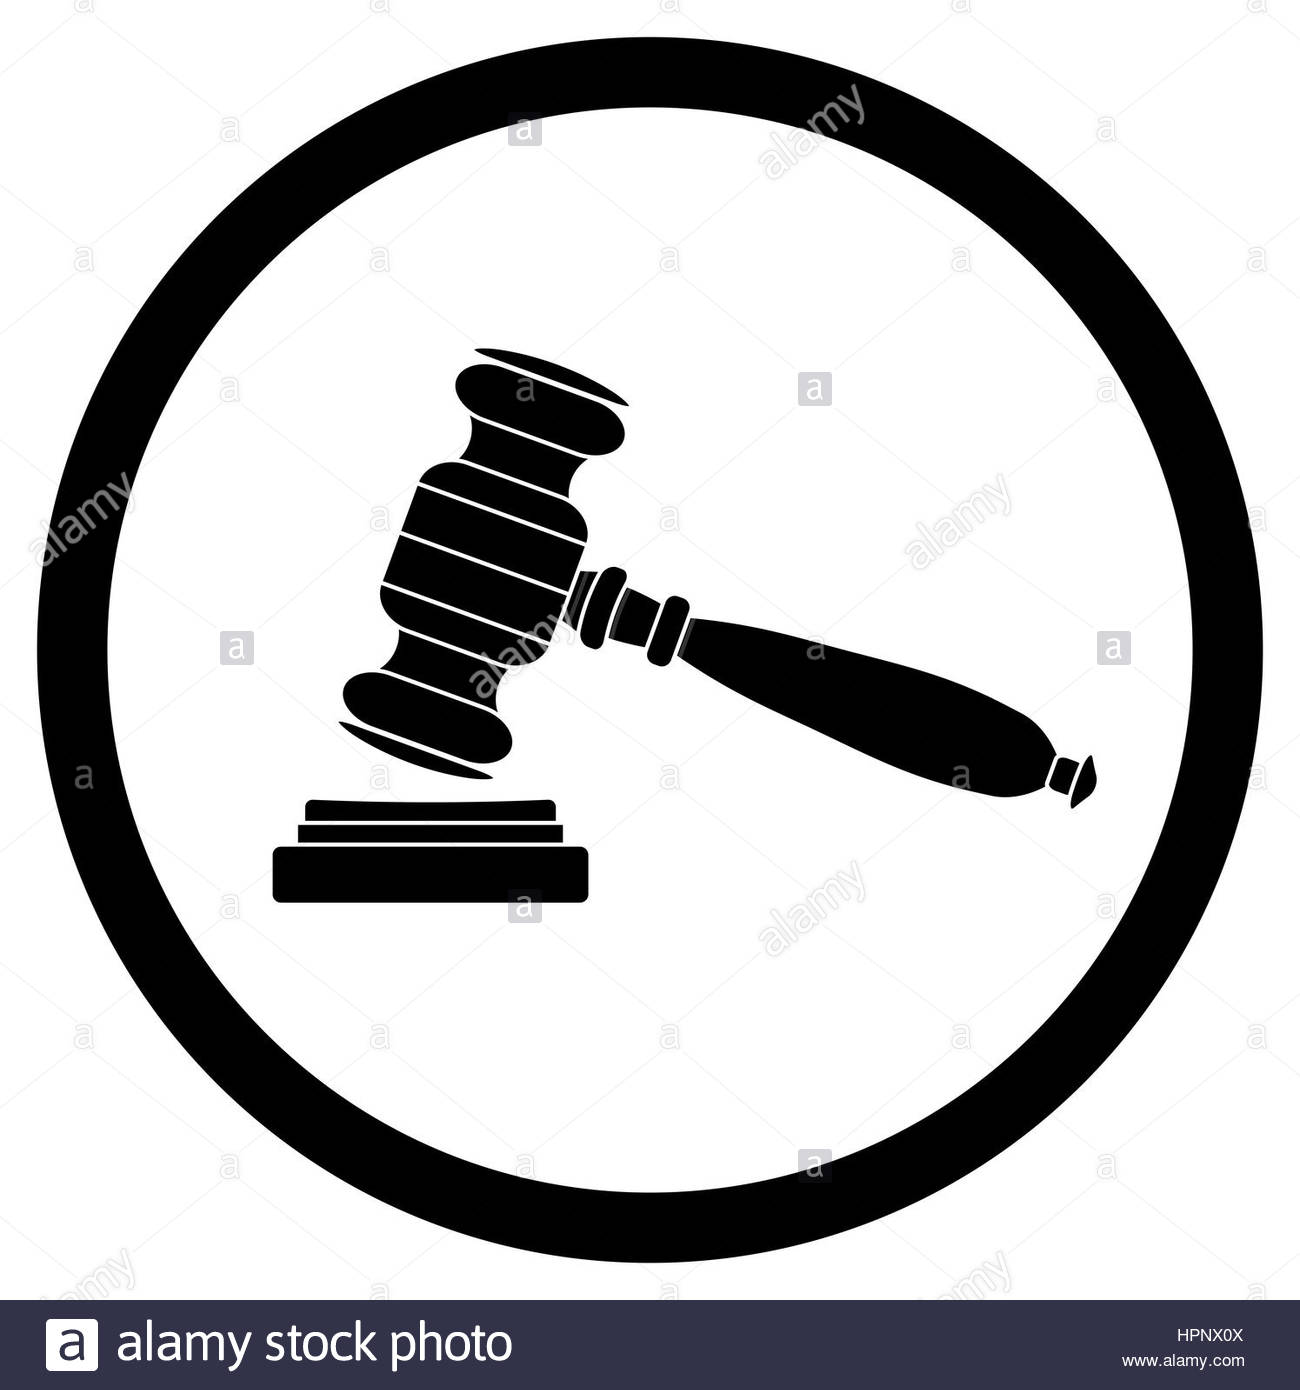 Contract, family, justice, law, legislation icon | Icon search engine